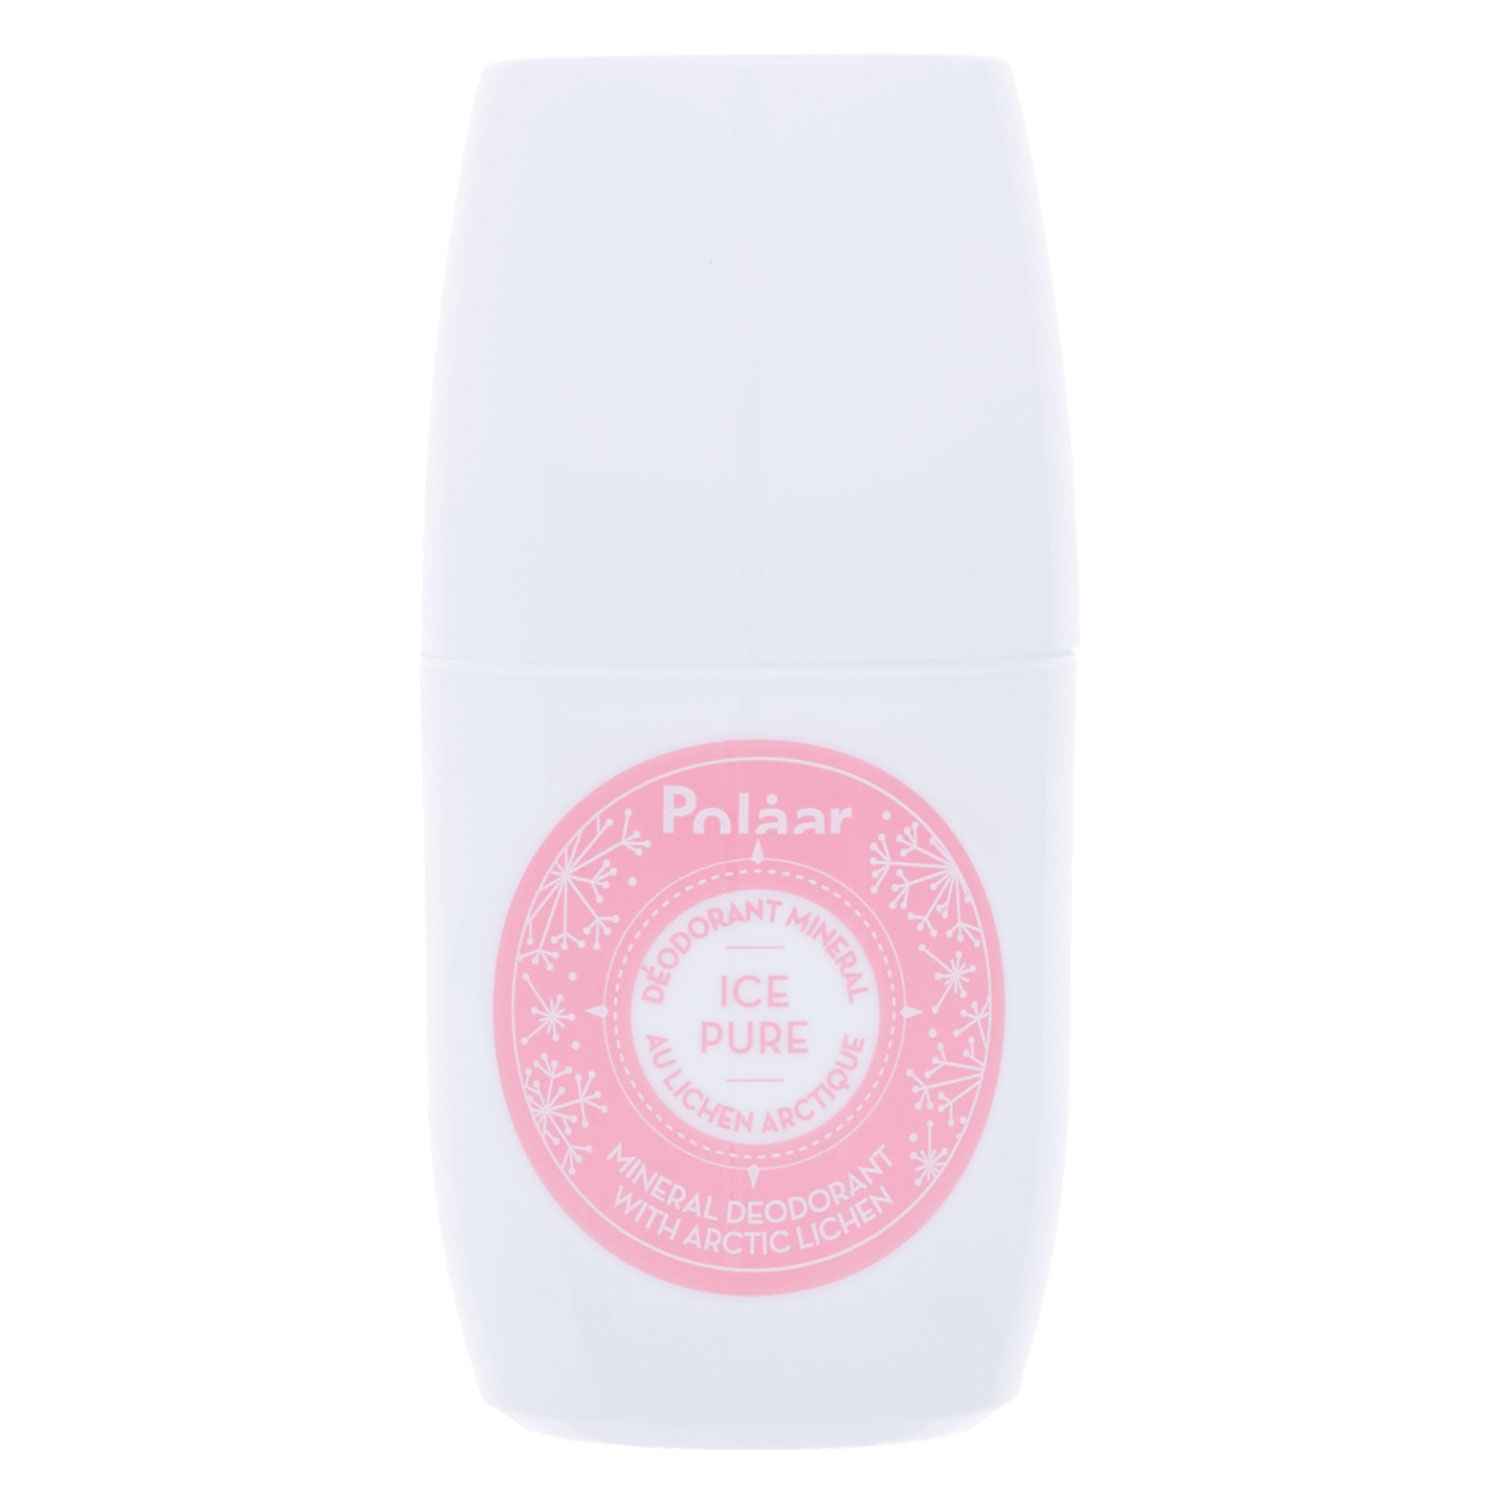 Image du produit de Polaar - Ice Pure Mineral Deodorant